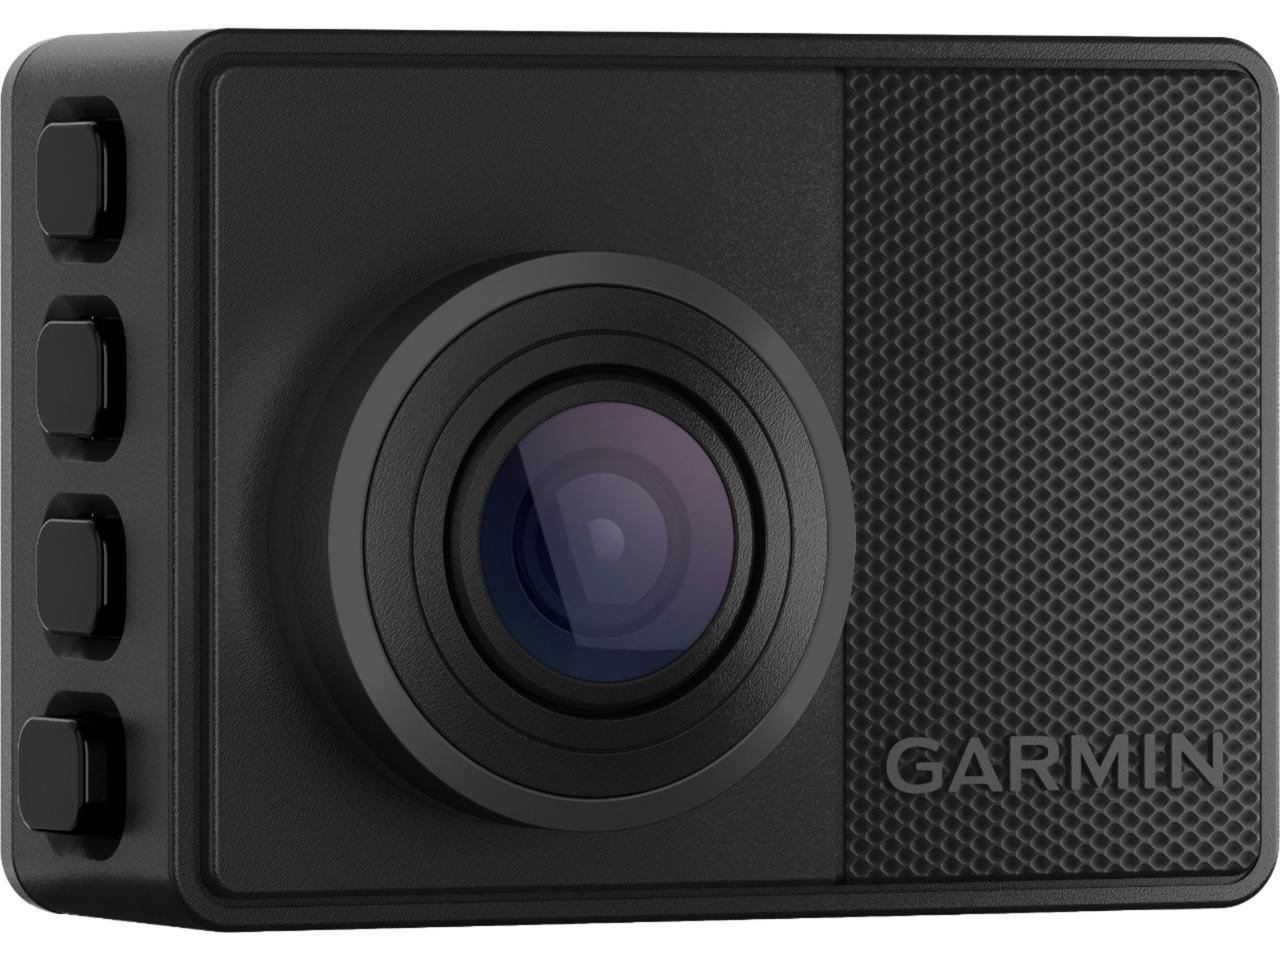 Garmin 67W 1440p Dash Cam, Black #010-02505-05 - image 1 of 21